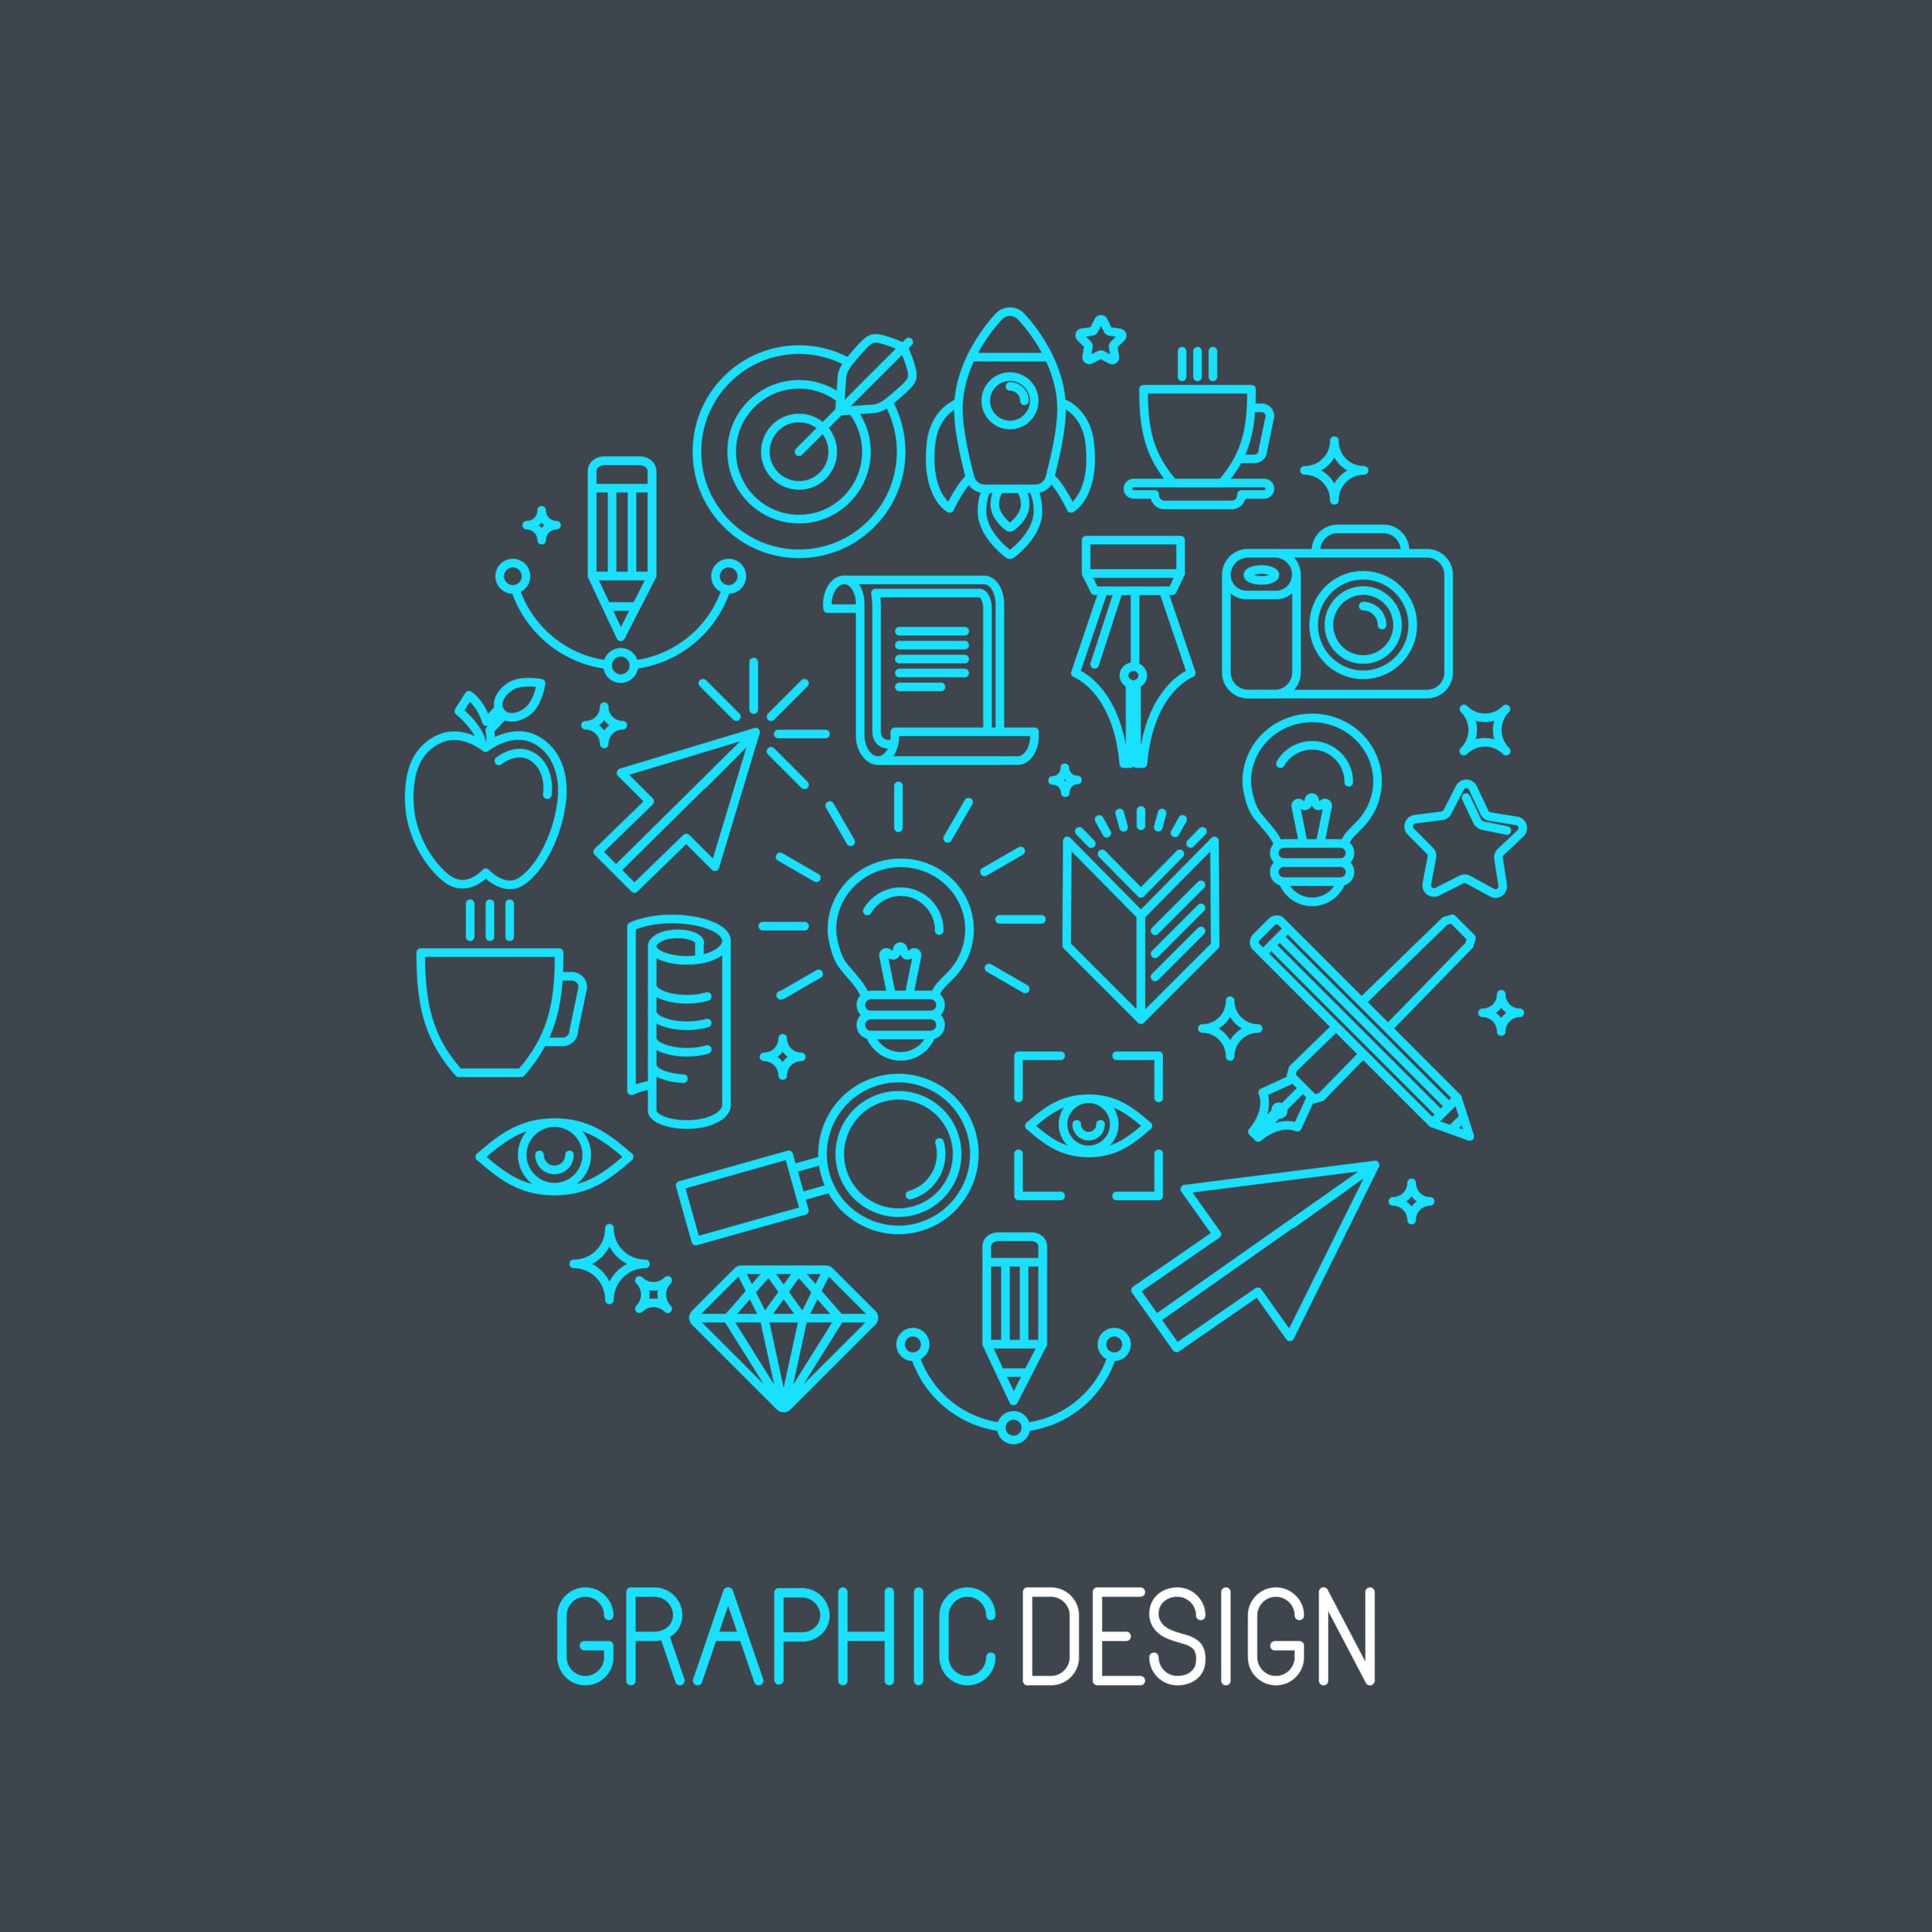 Best Graphic Design Schools In The World - Best Design Idea